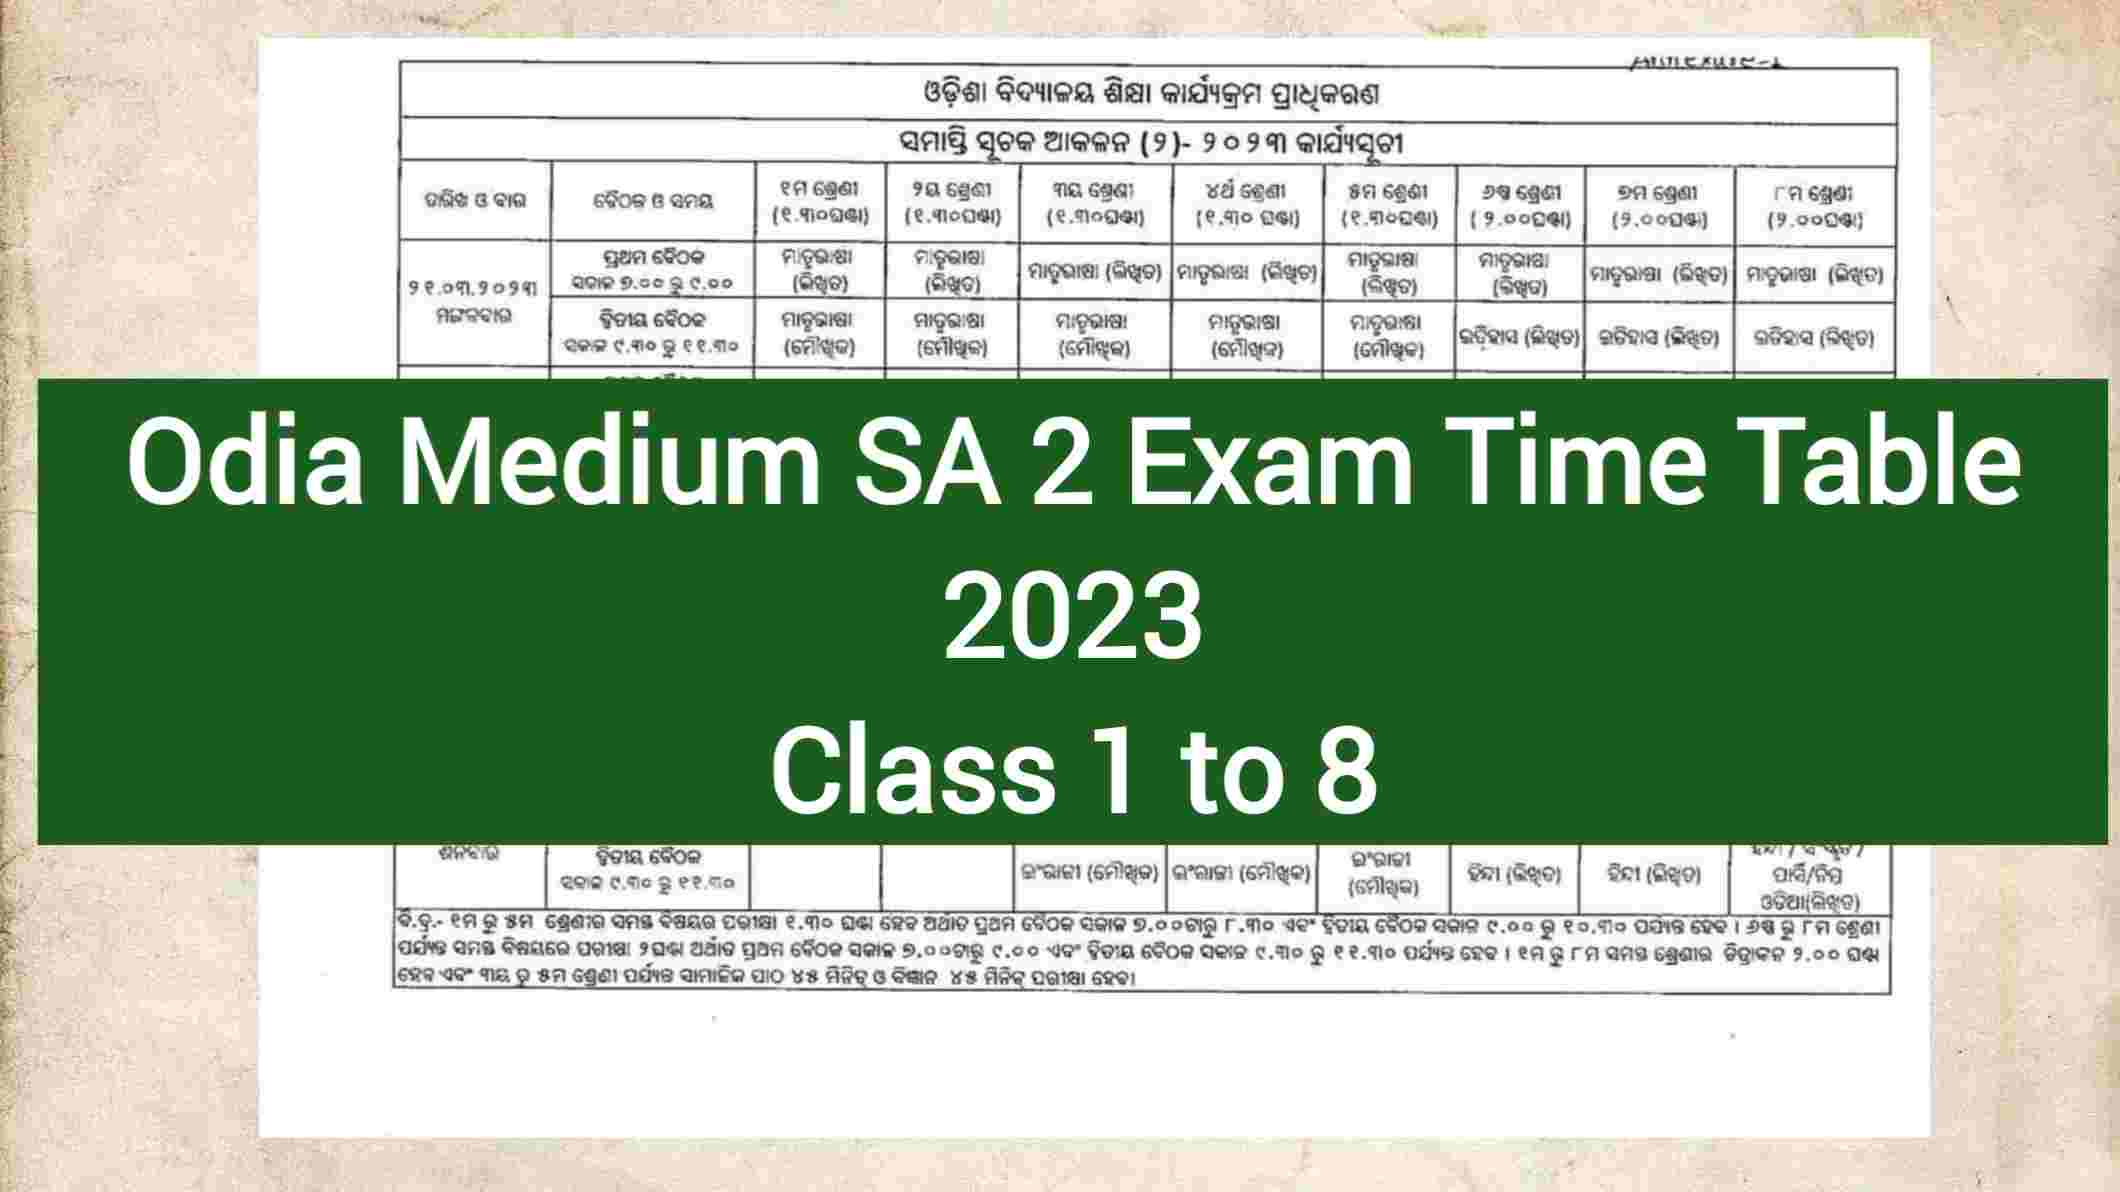 Odia Medium SA 2 Exam 2023 Class 1 to 8 Time Table